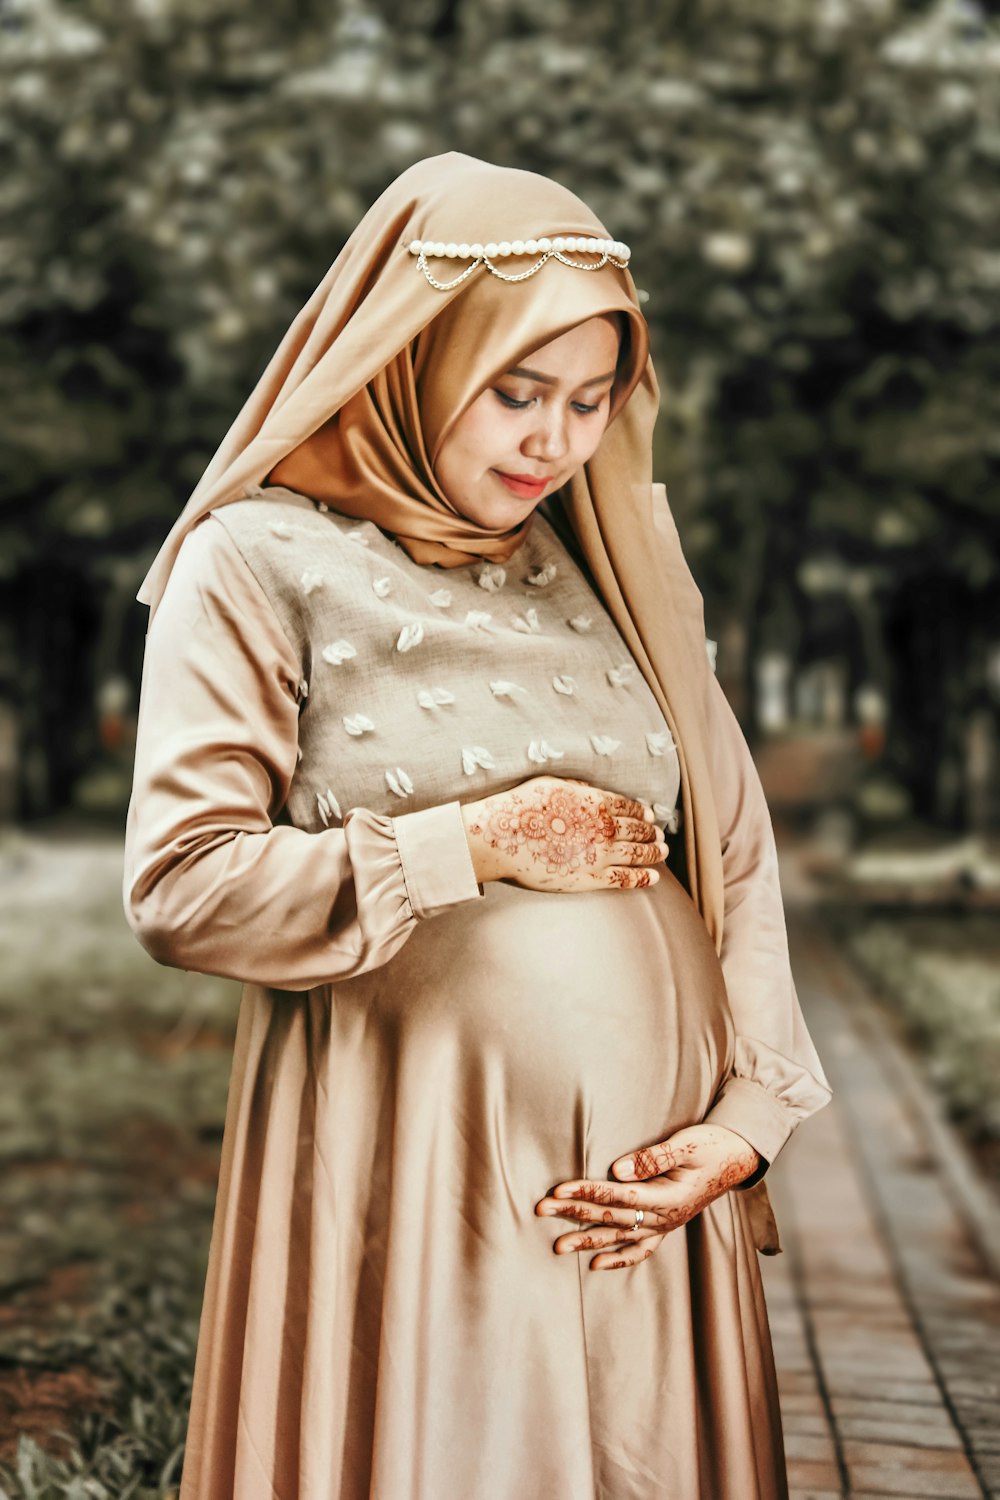 pregnant woman standing wearing brown dress